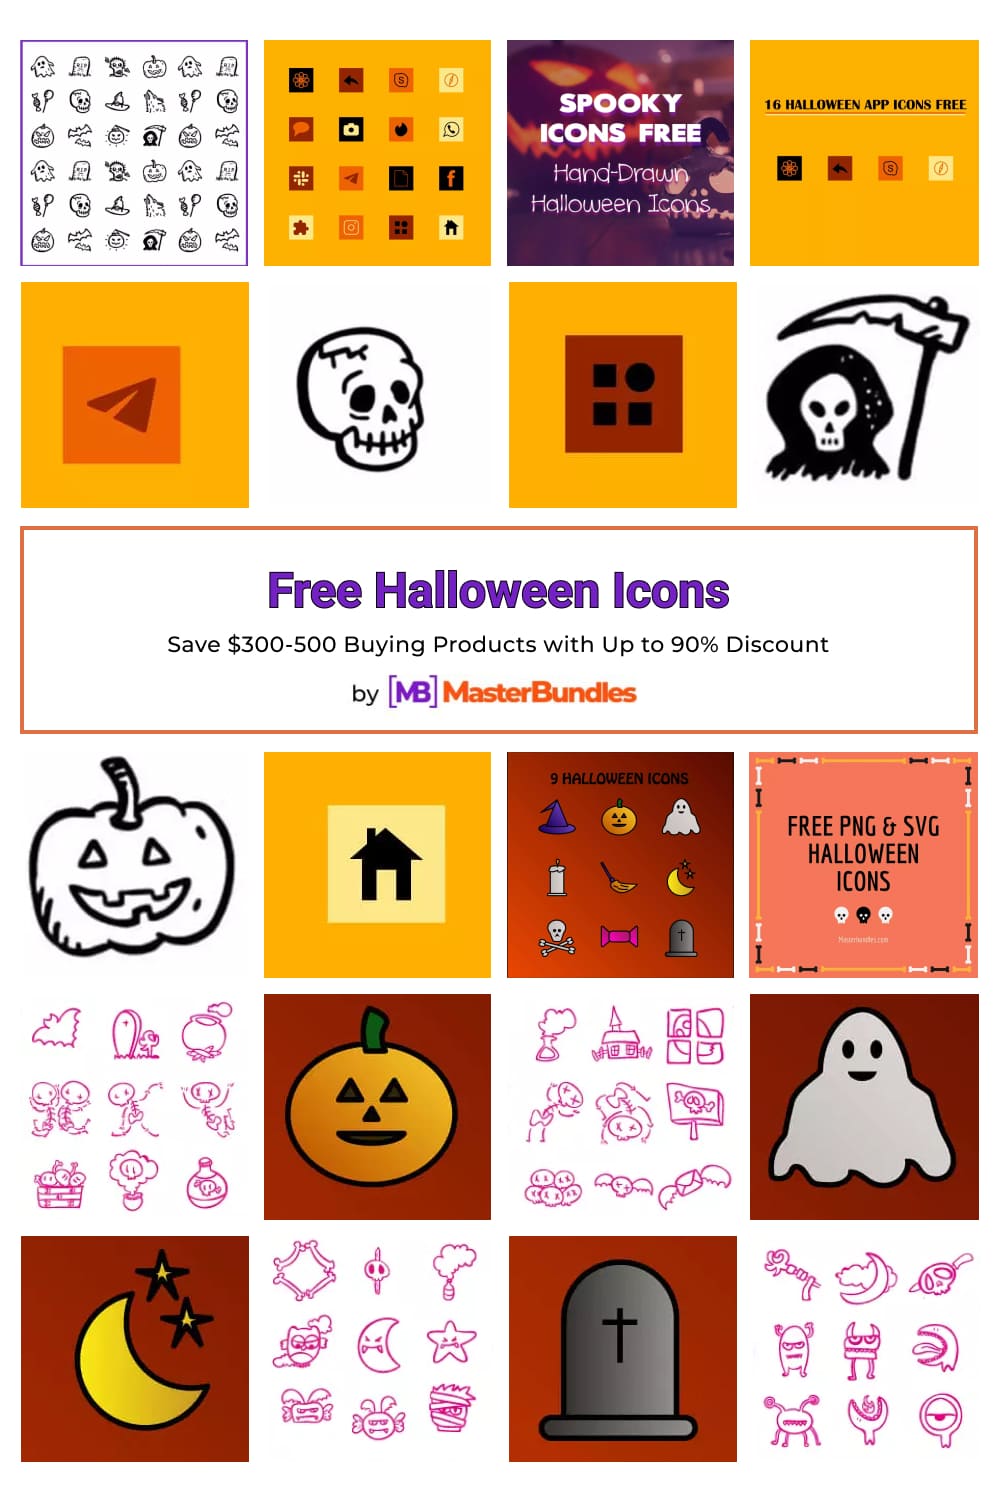 Free Halloween Icons Pinterest image.